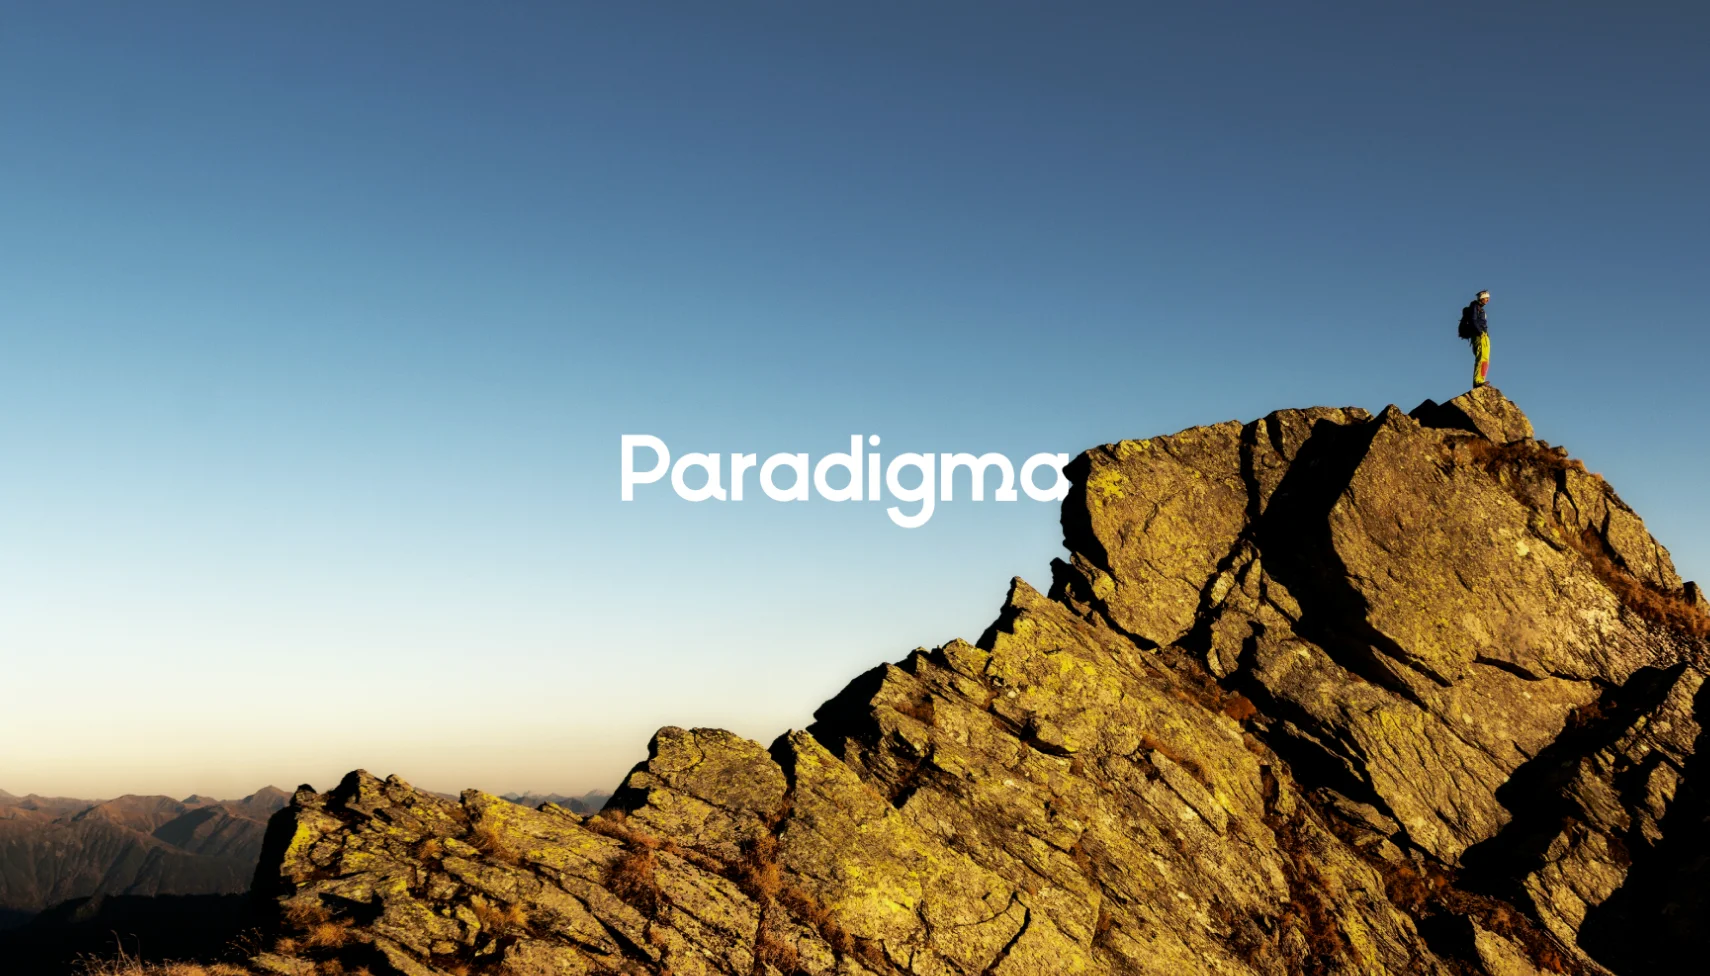 001_Portafolio_Paradigma_branding